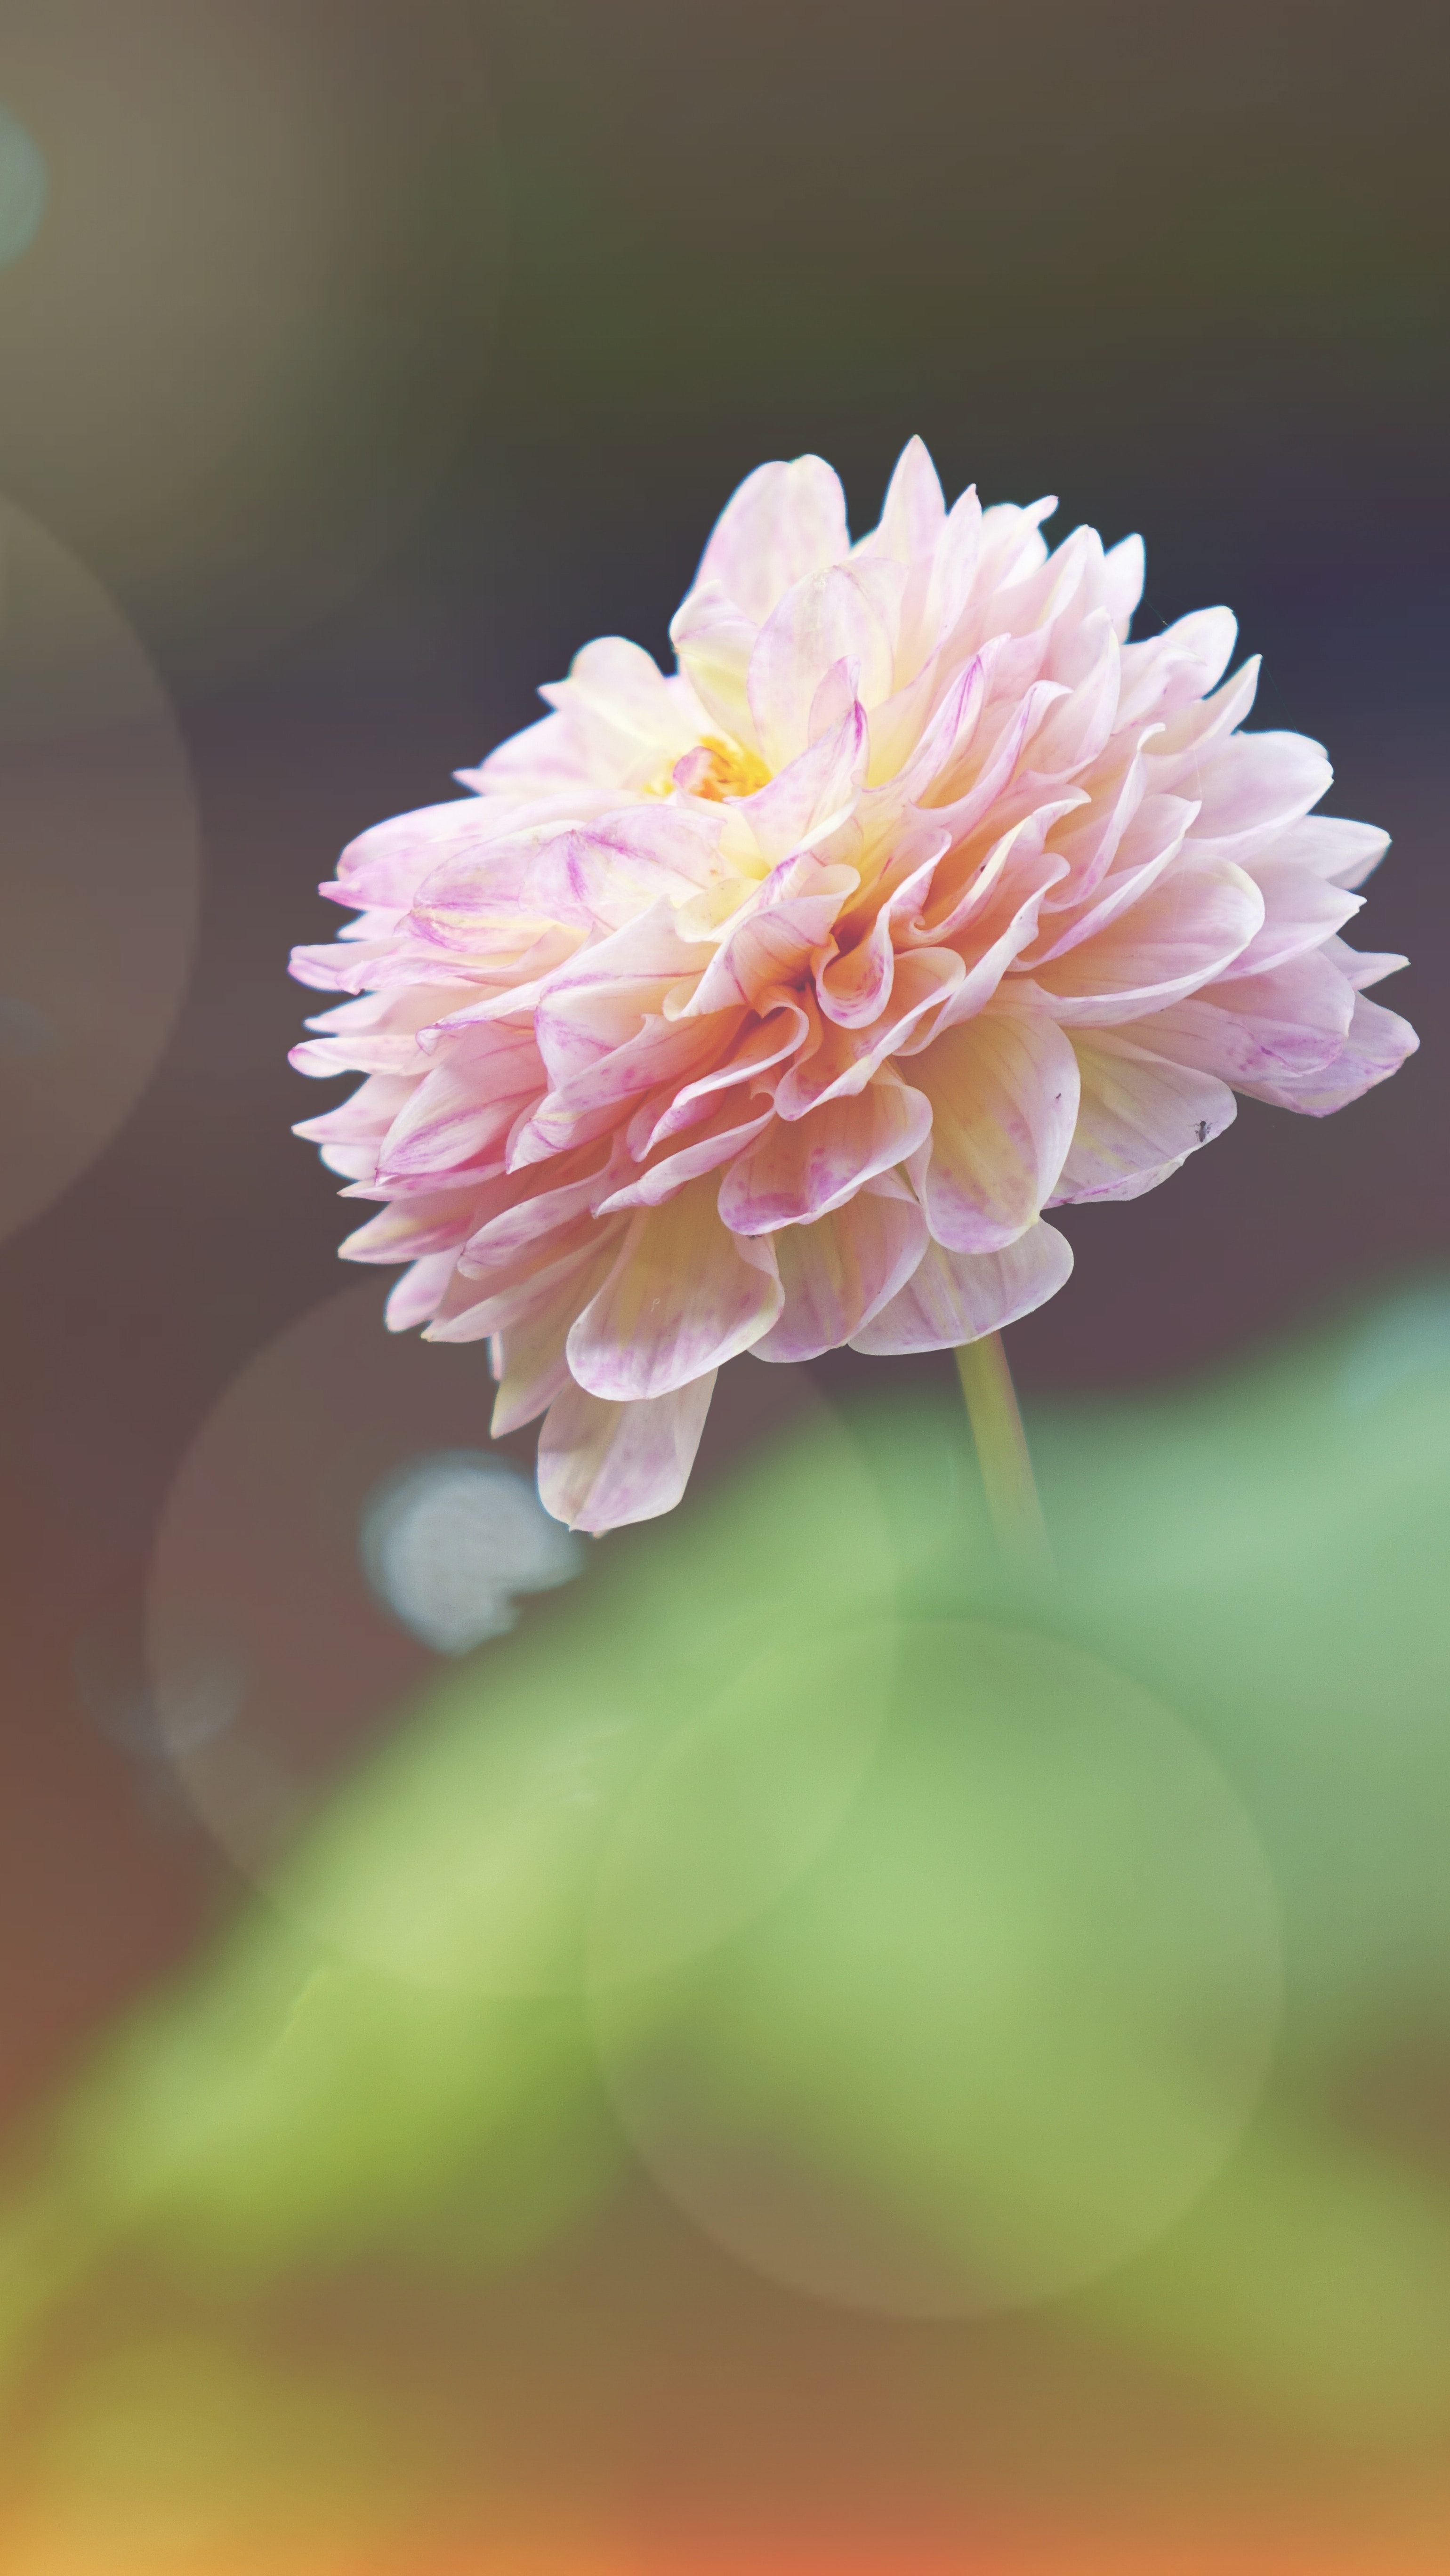 Sunlit Pink Flower iPhone Wallpaper